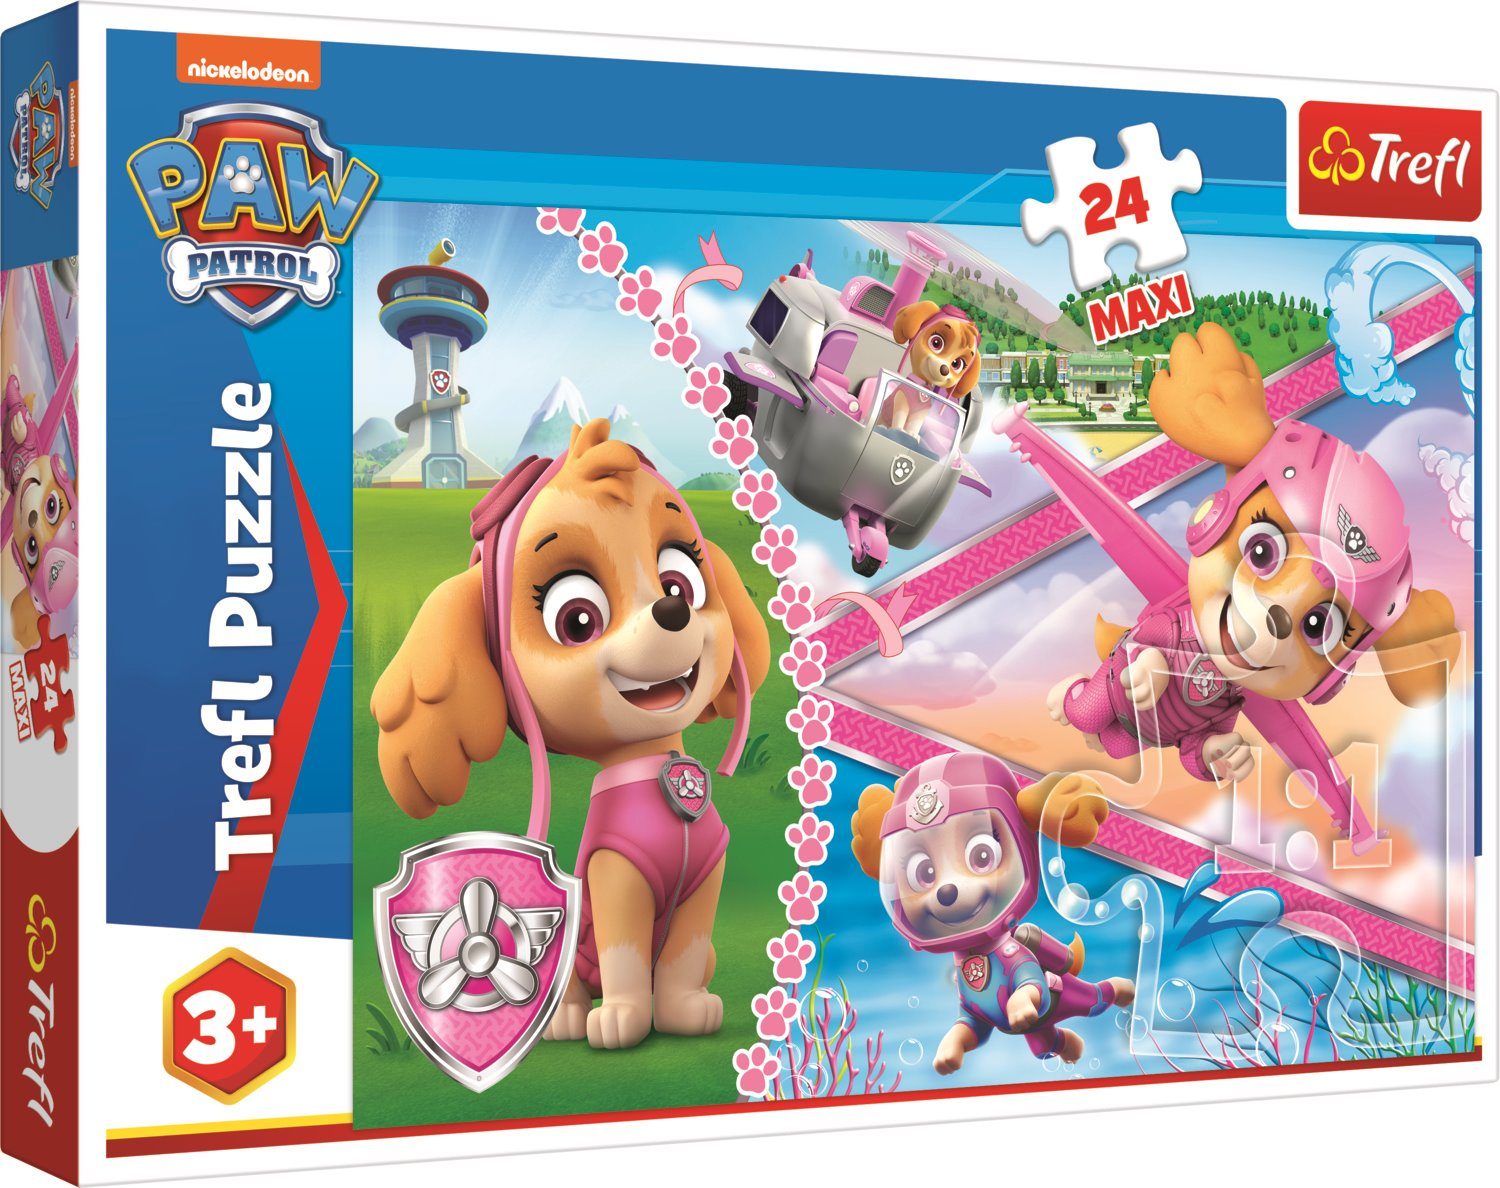 Puzzle Patrulla Canina: Heroic Sky 24 maxi